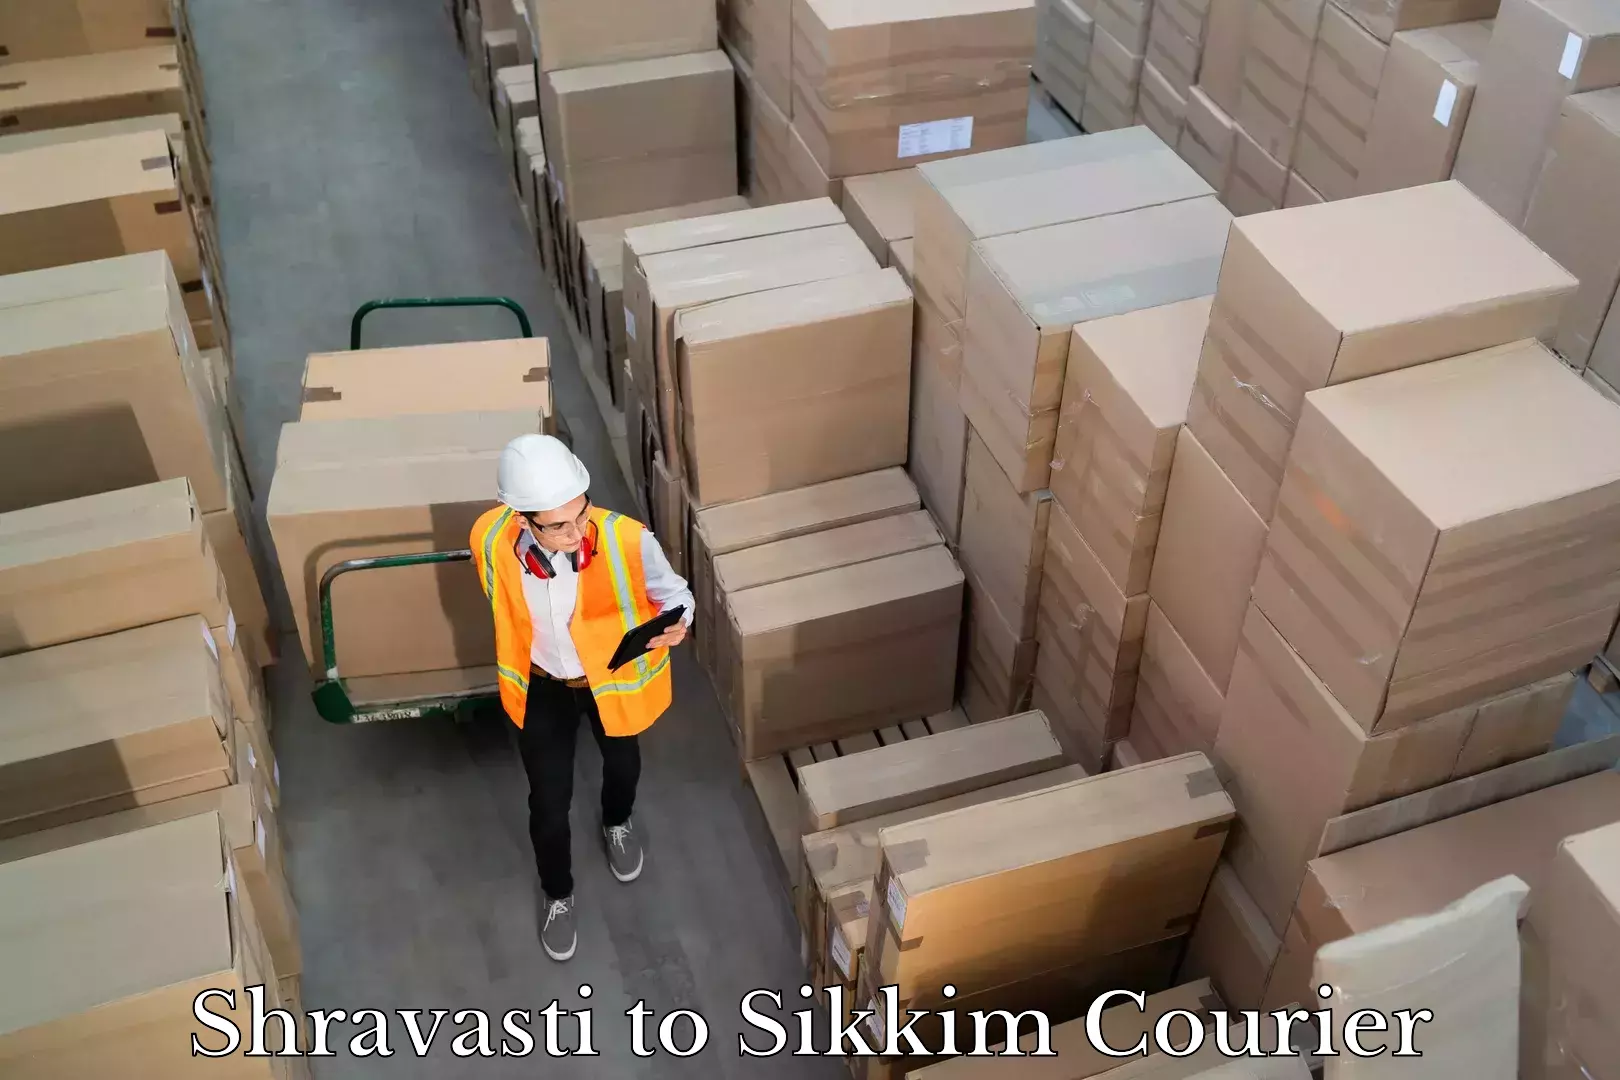 Subscription-based courier Shravasti to Sikkim